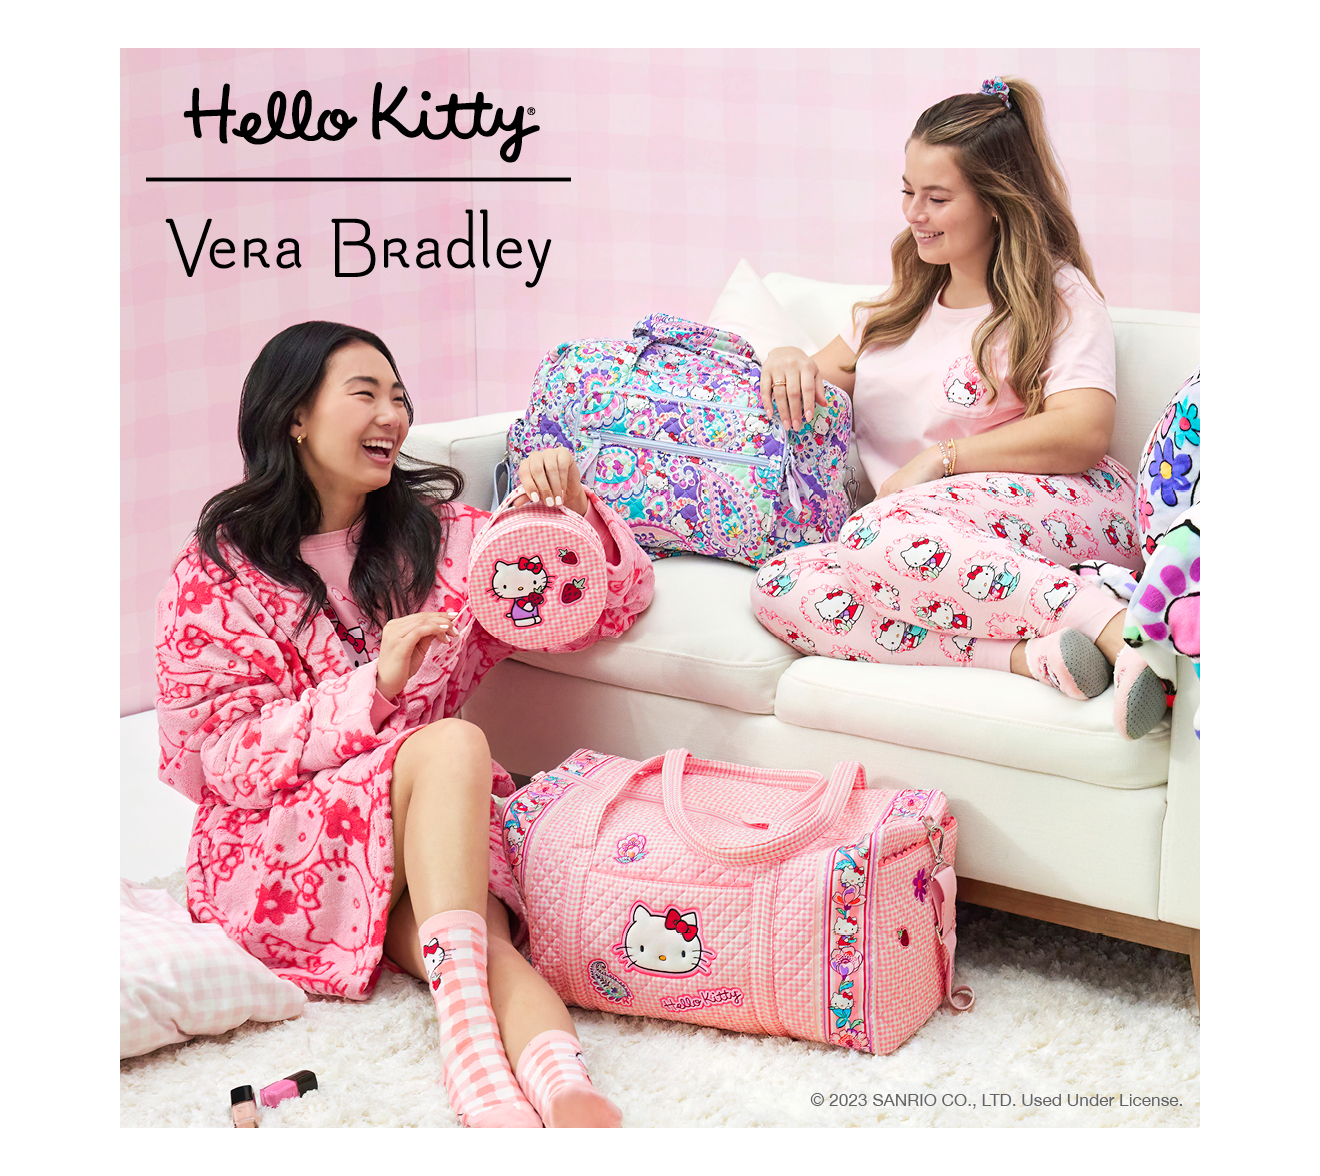 Vera Bradley Hello Kitty.